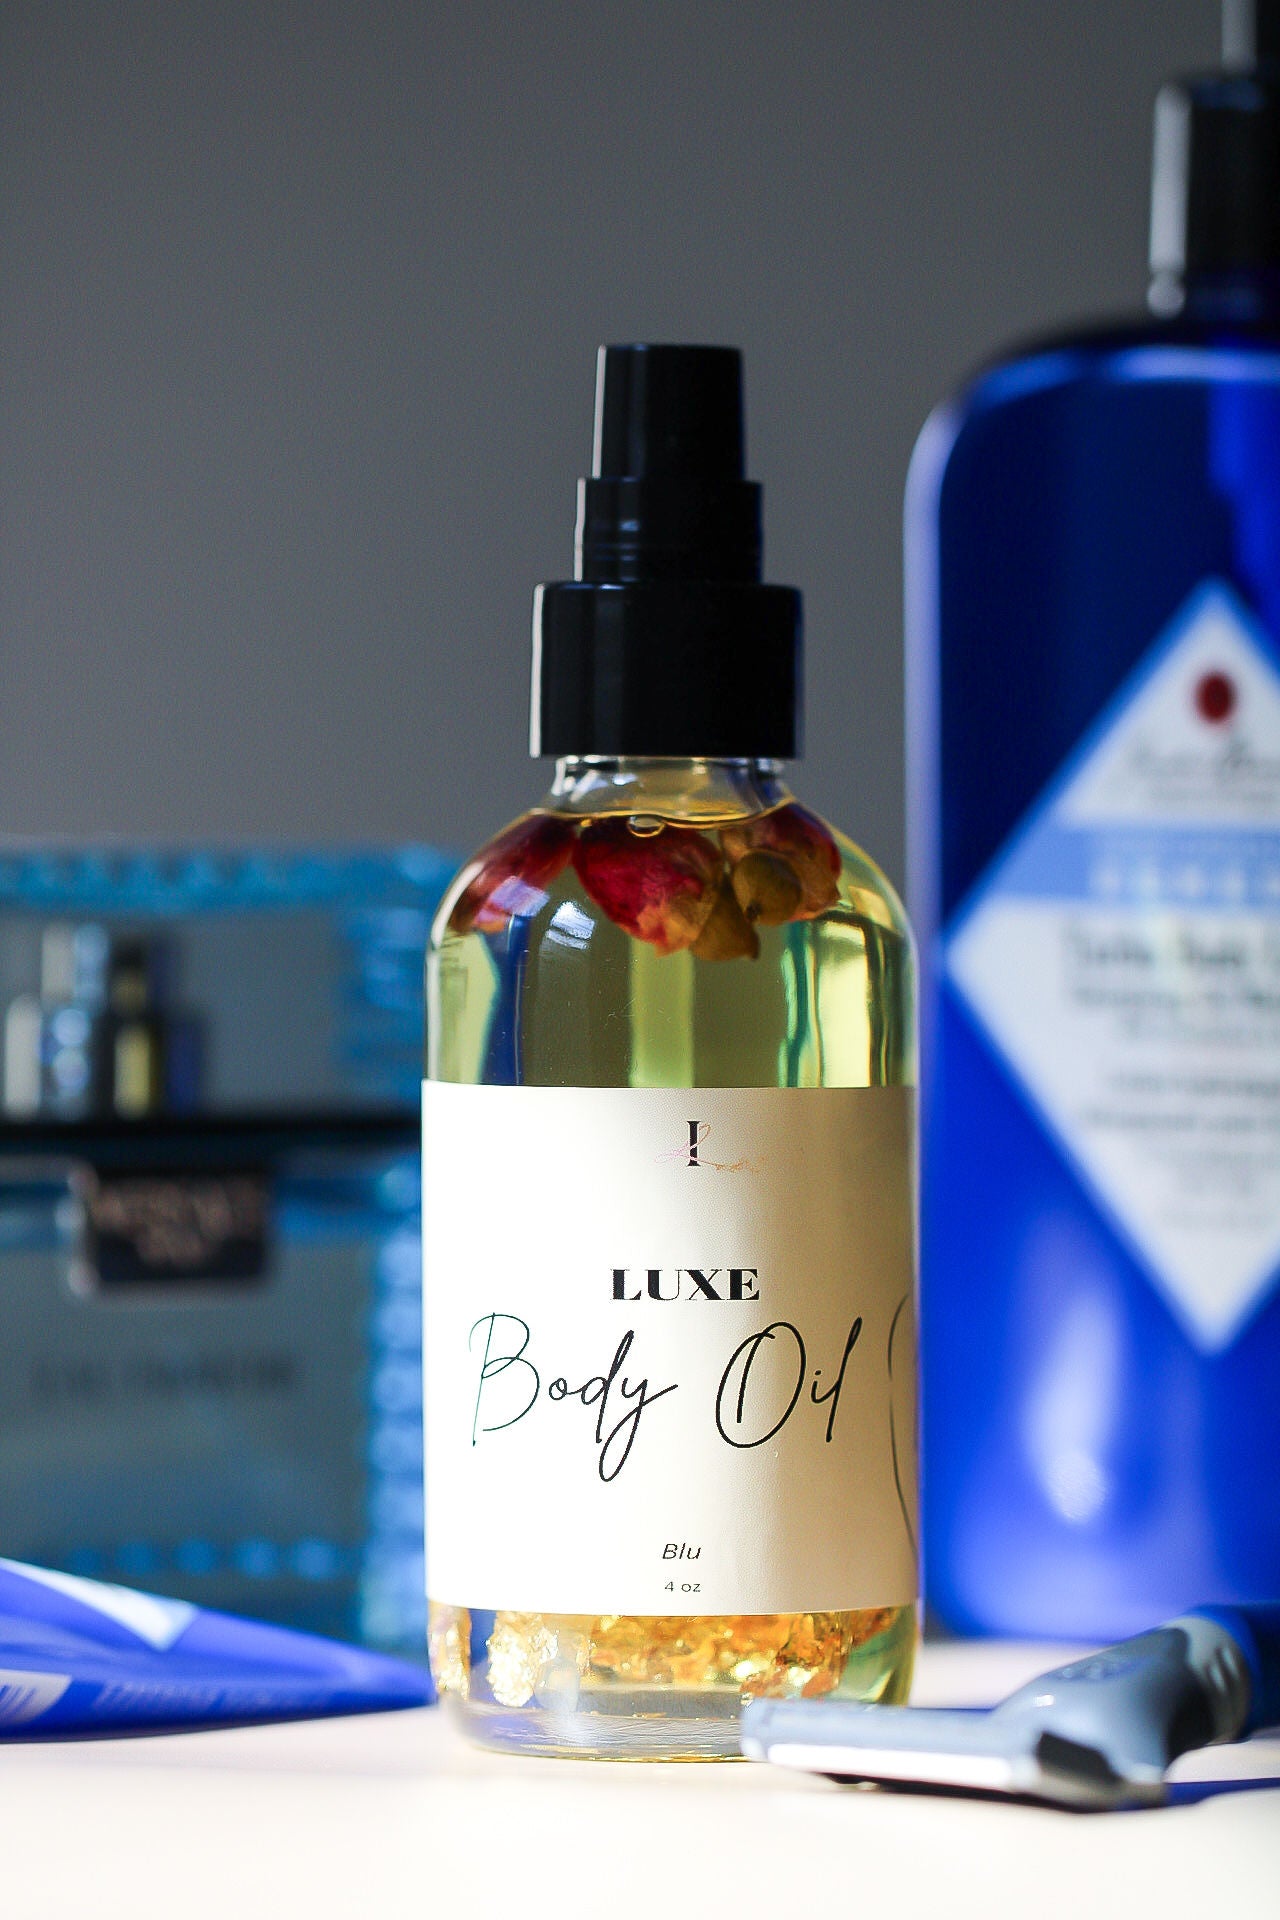 Blu (Masculine scent) Luxe body oil